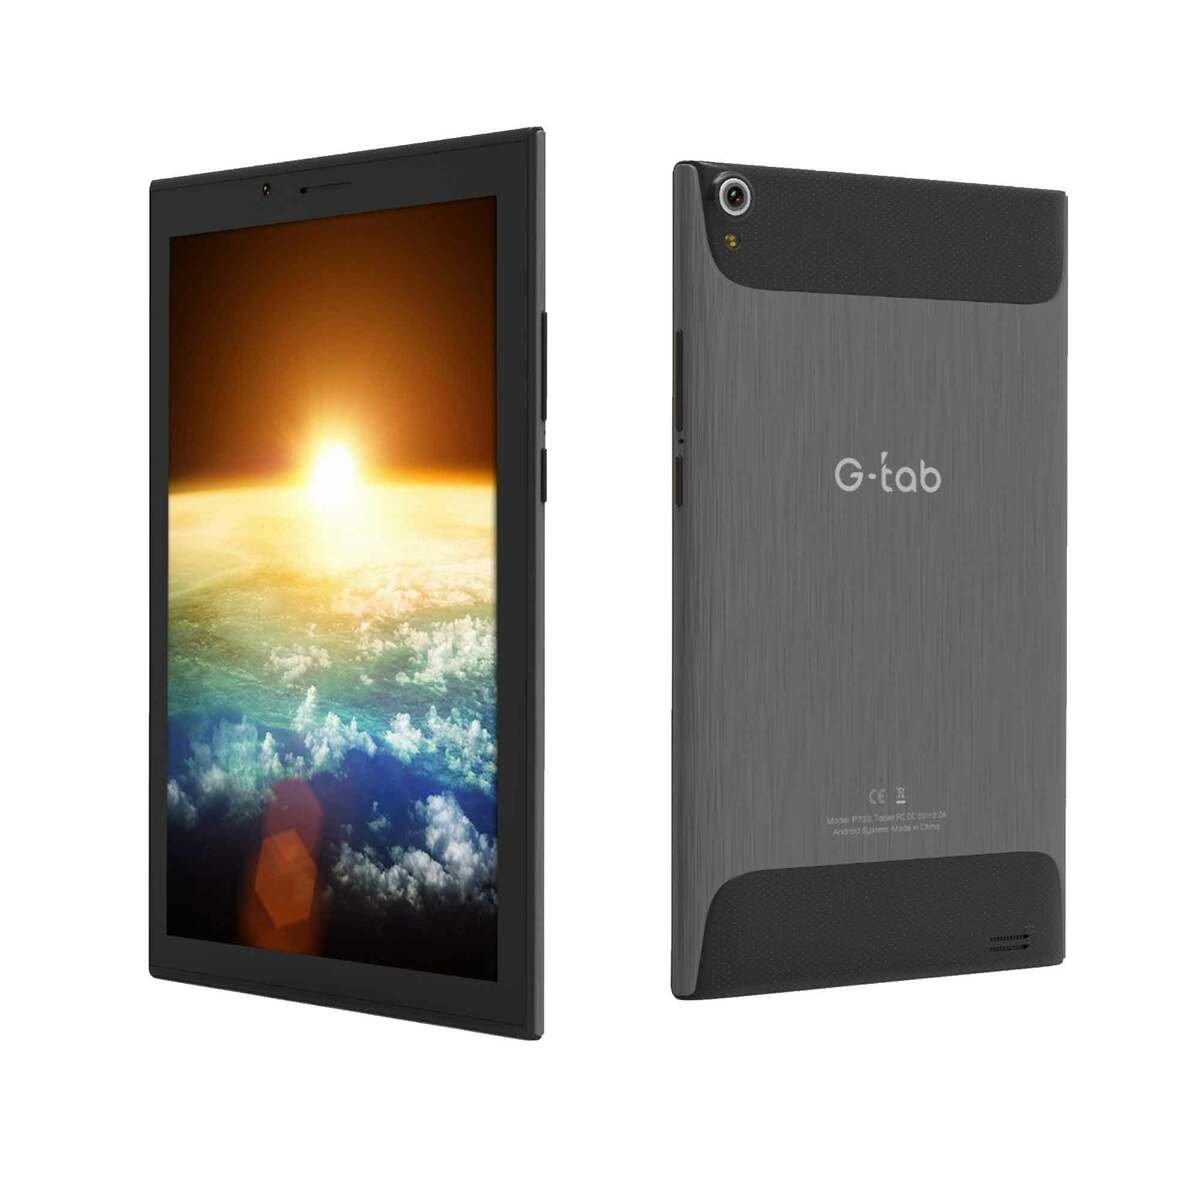 Gtab Tablet P733, 3G, Quad-core Processor, 1GB RAM, 16GB Memory, 7.0 inches Display, Android, Black